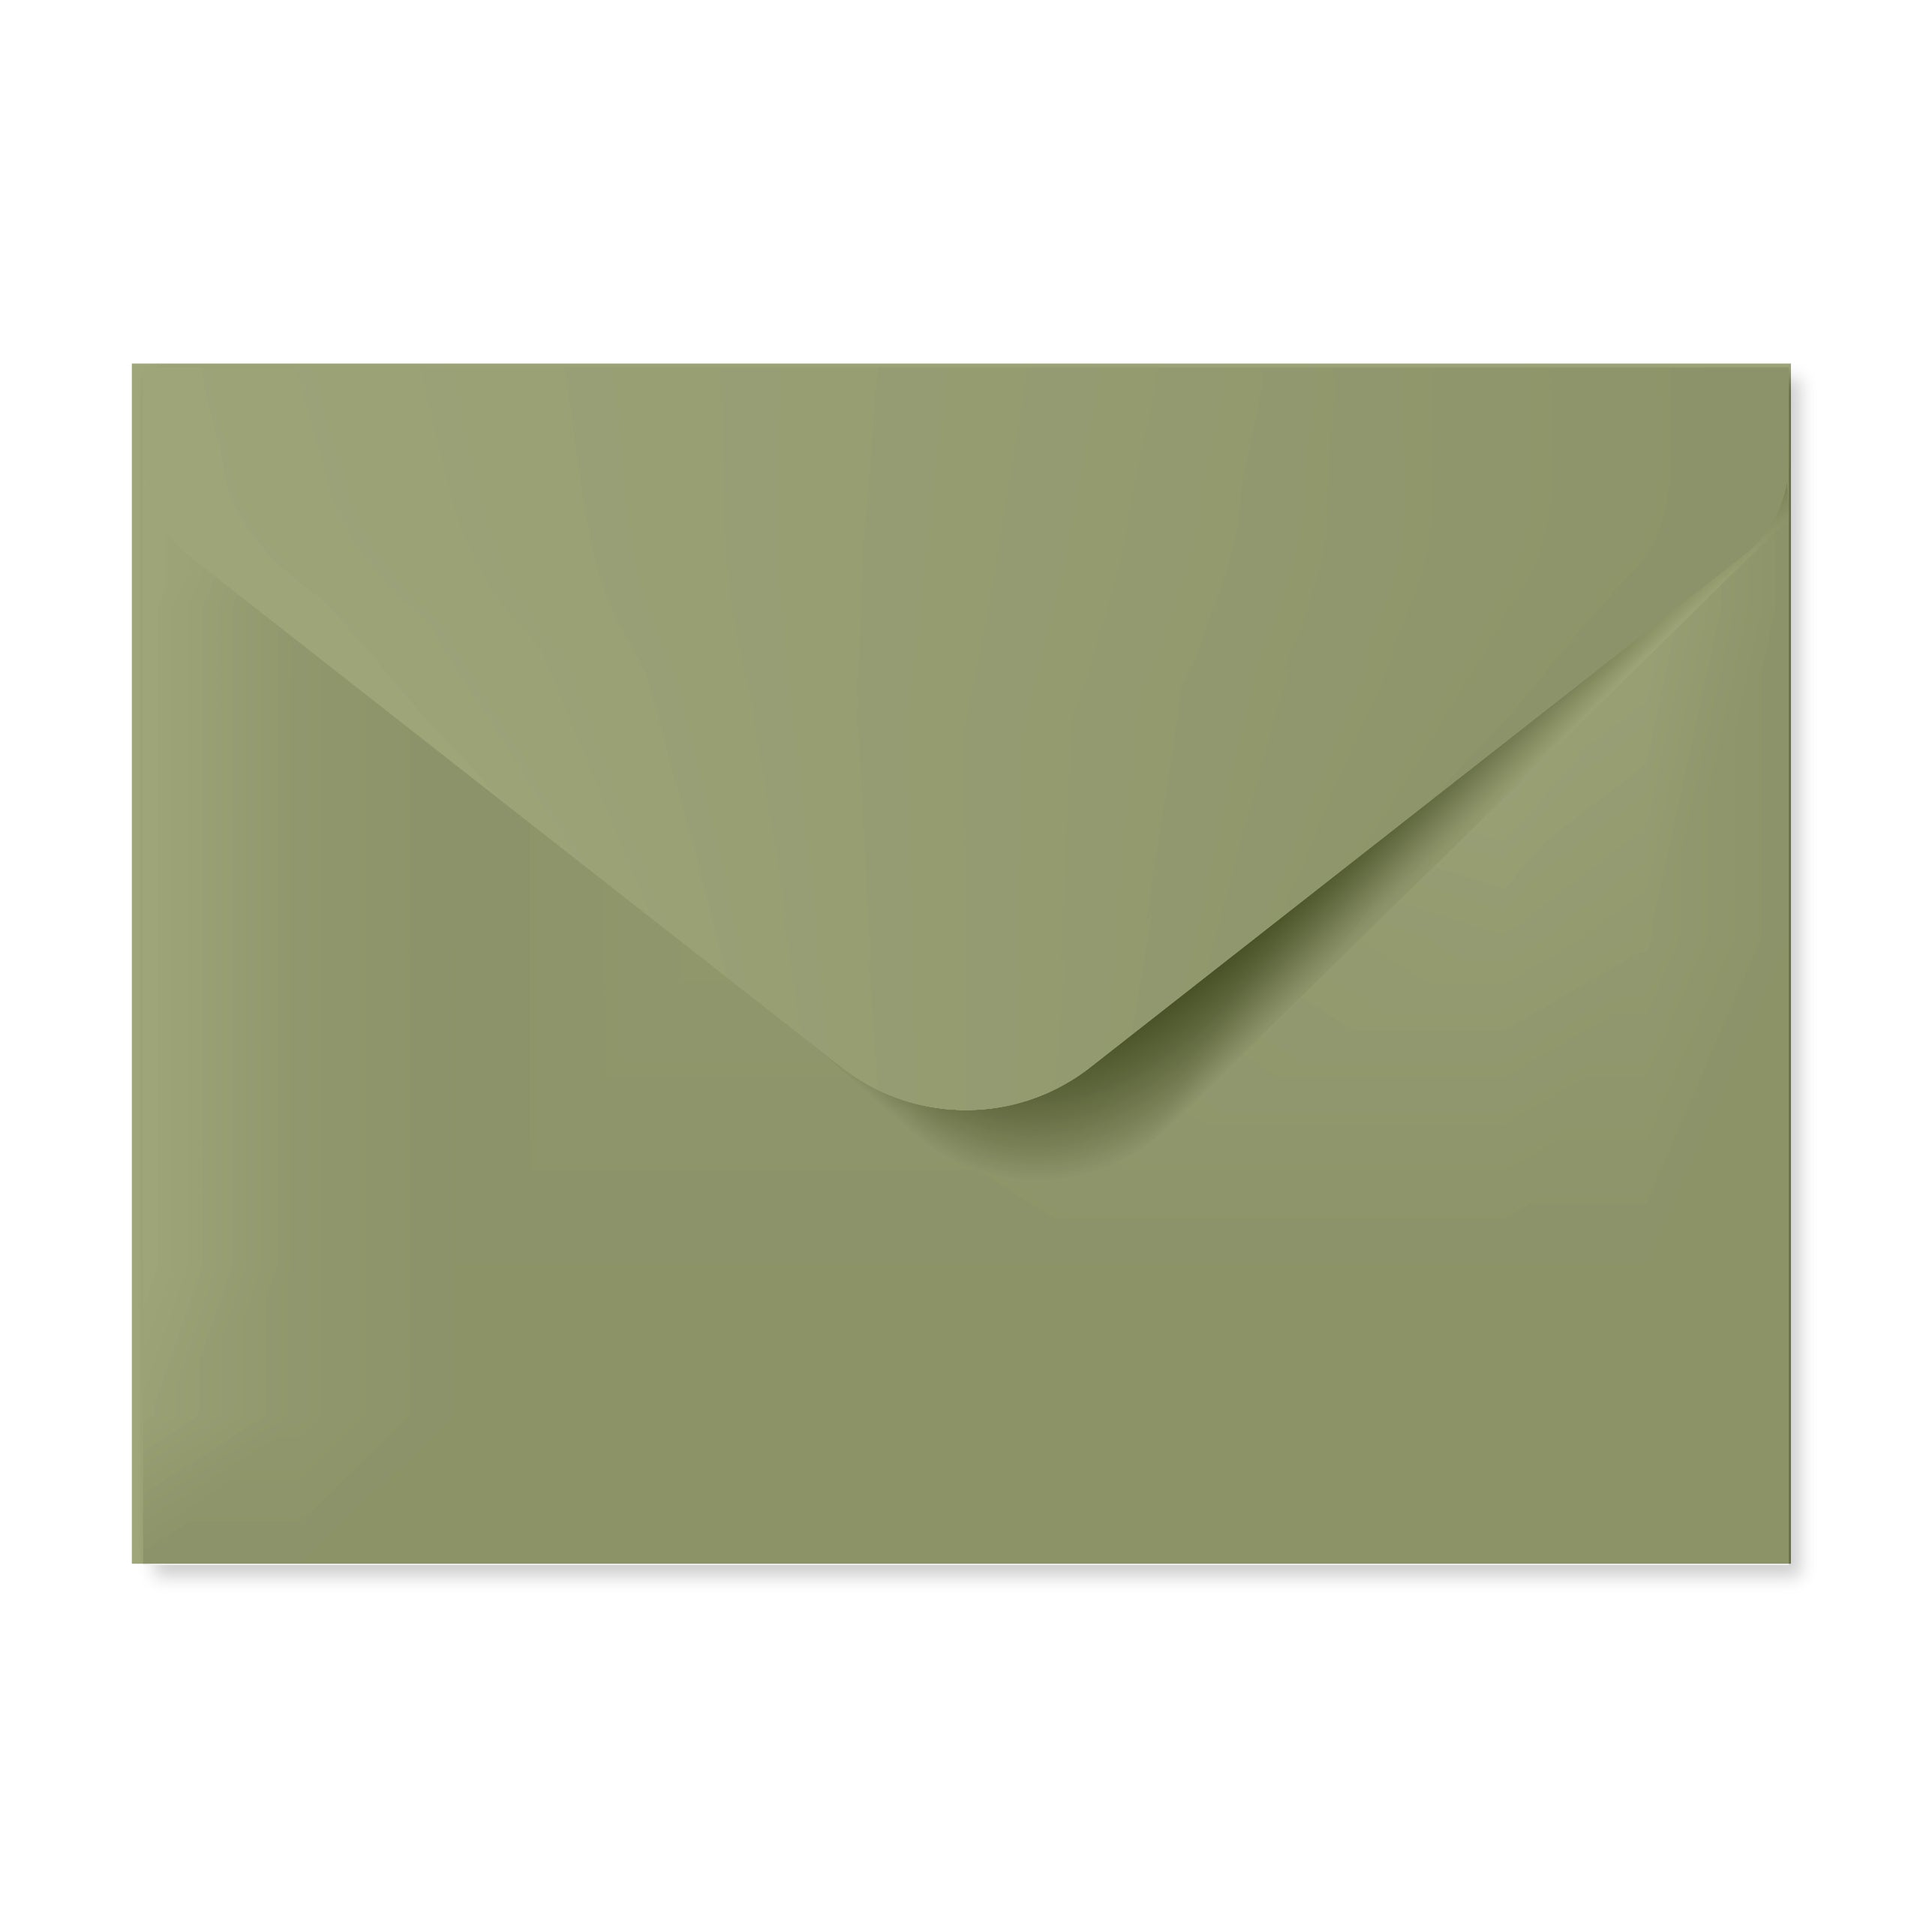 NT Rasha 151gsm Envelope 4.5"x6.38" mist green Default Title